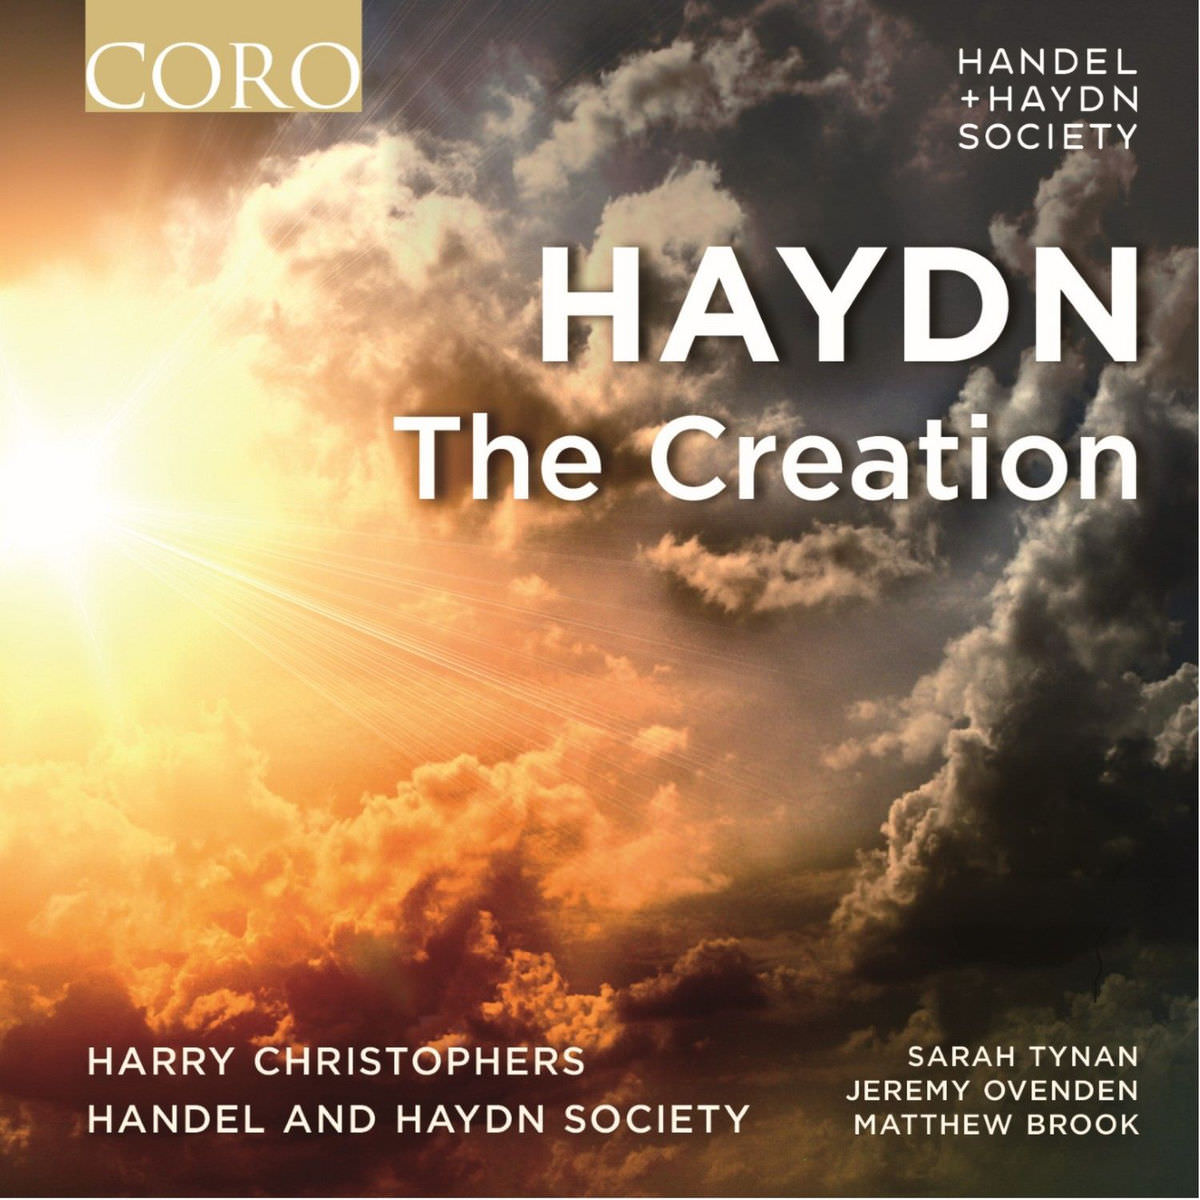 Handel and Haydn Society & Harry Christophers - Haydn: The Creation (2015) [FLAC 24bit/96kHz]